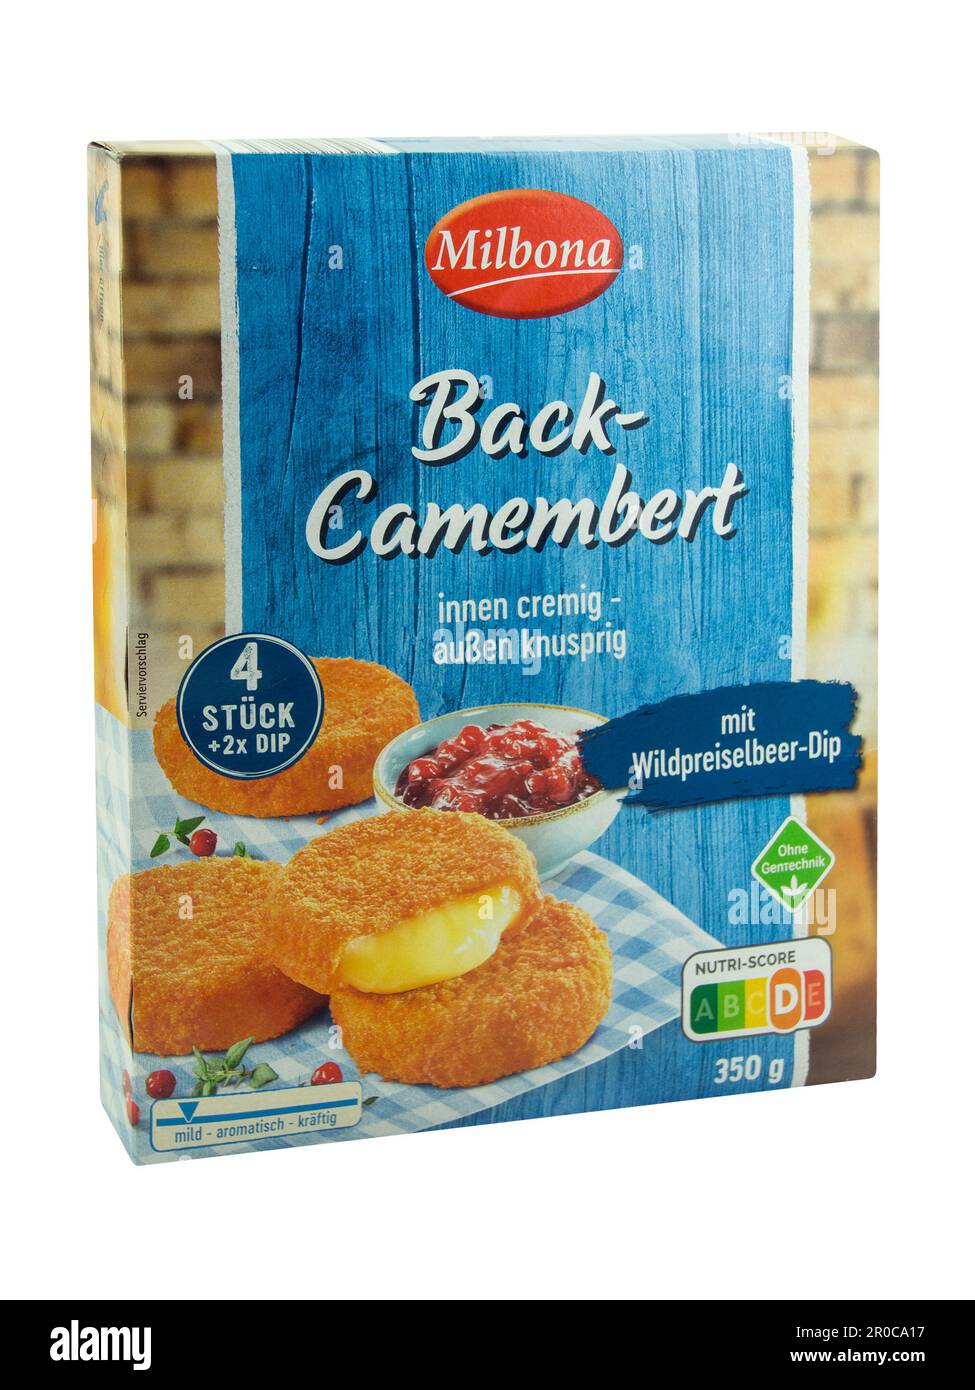 Milbona Back-Camembert mit Wildpreiselbeeren Dip Stock Photo - Alamy